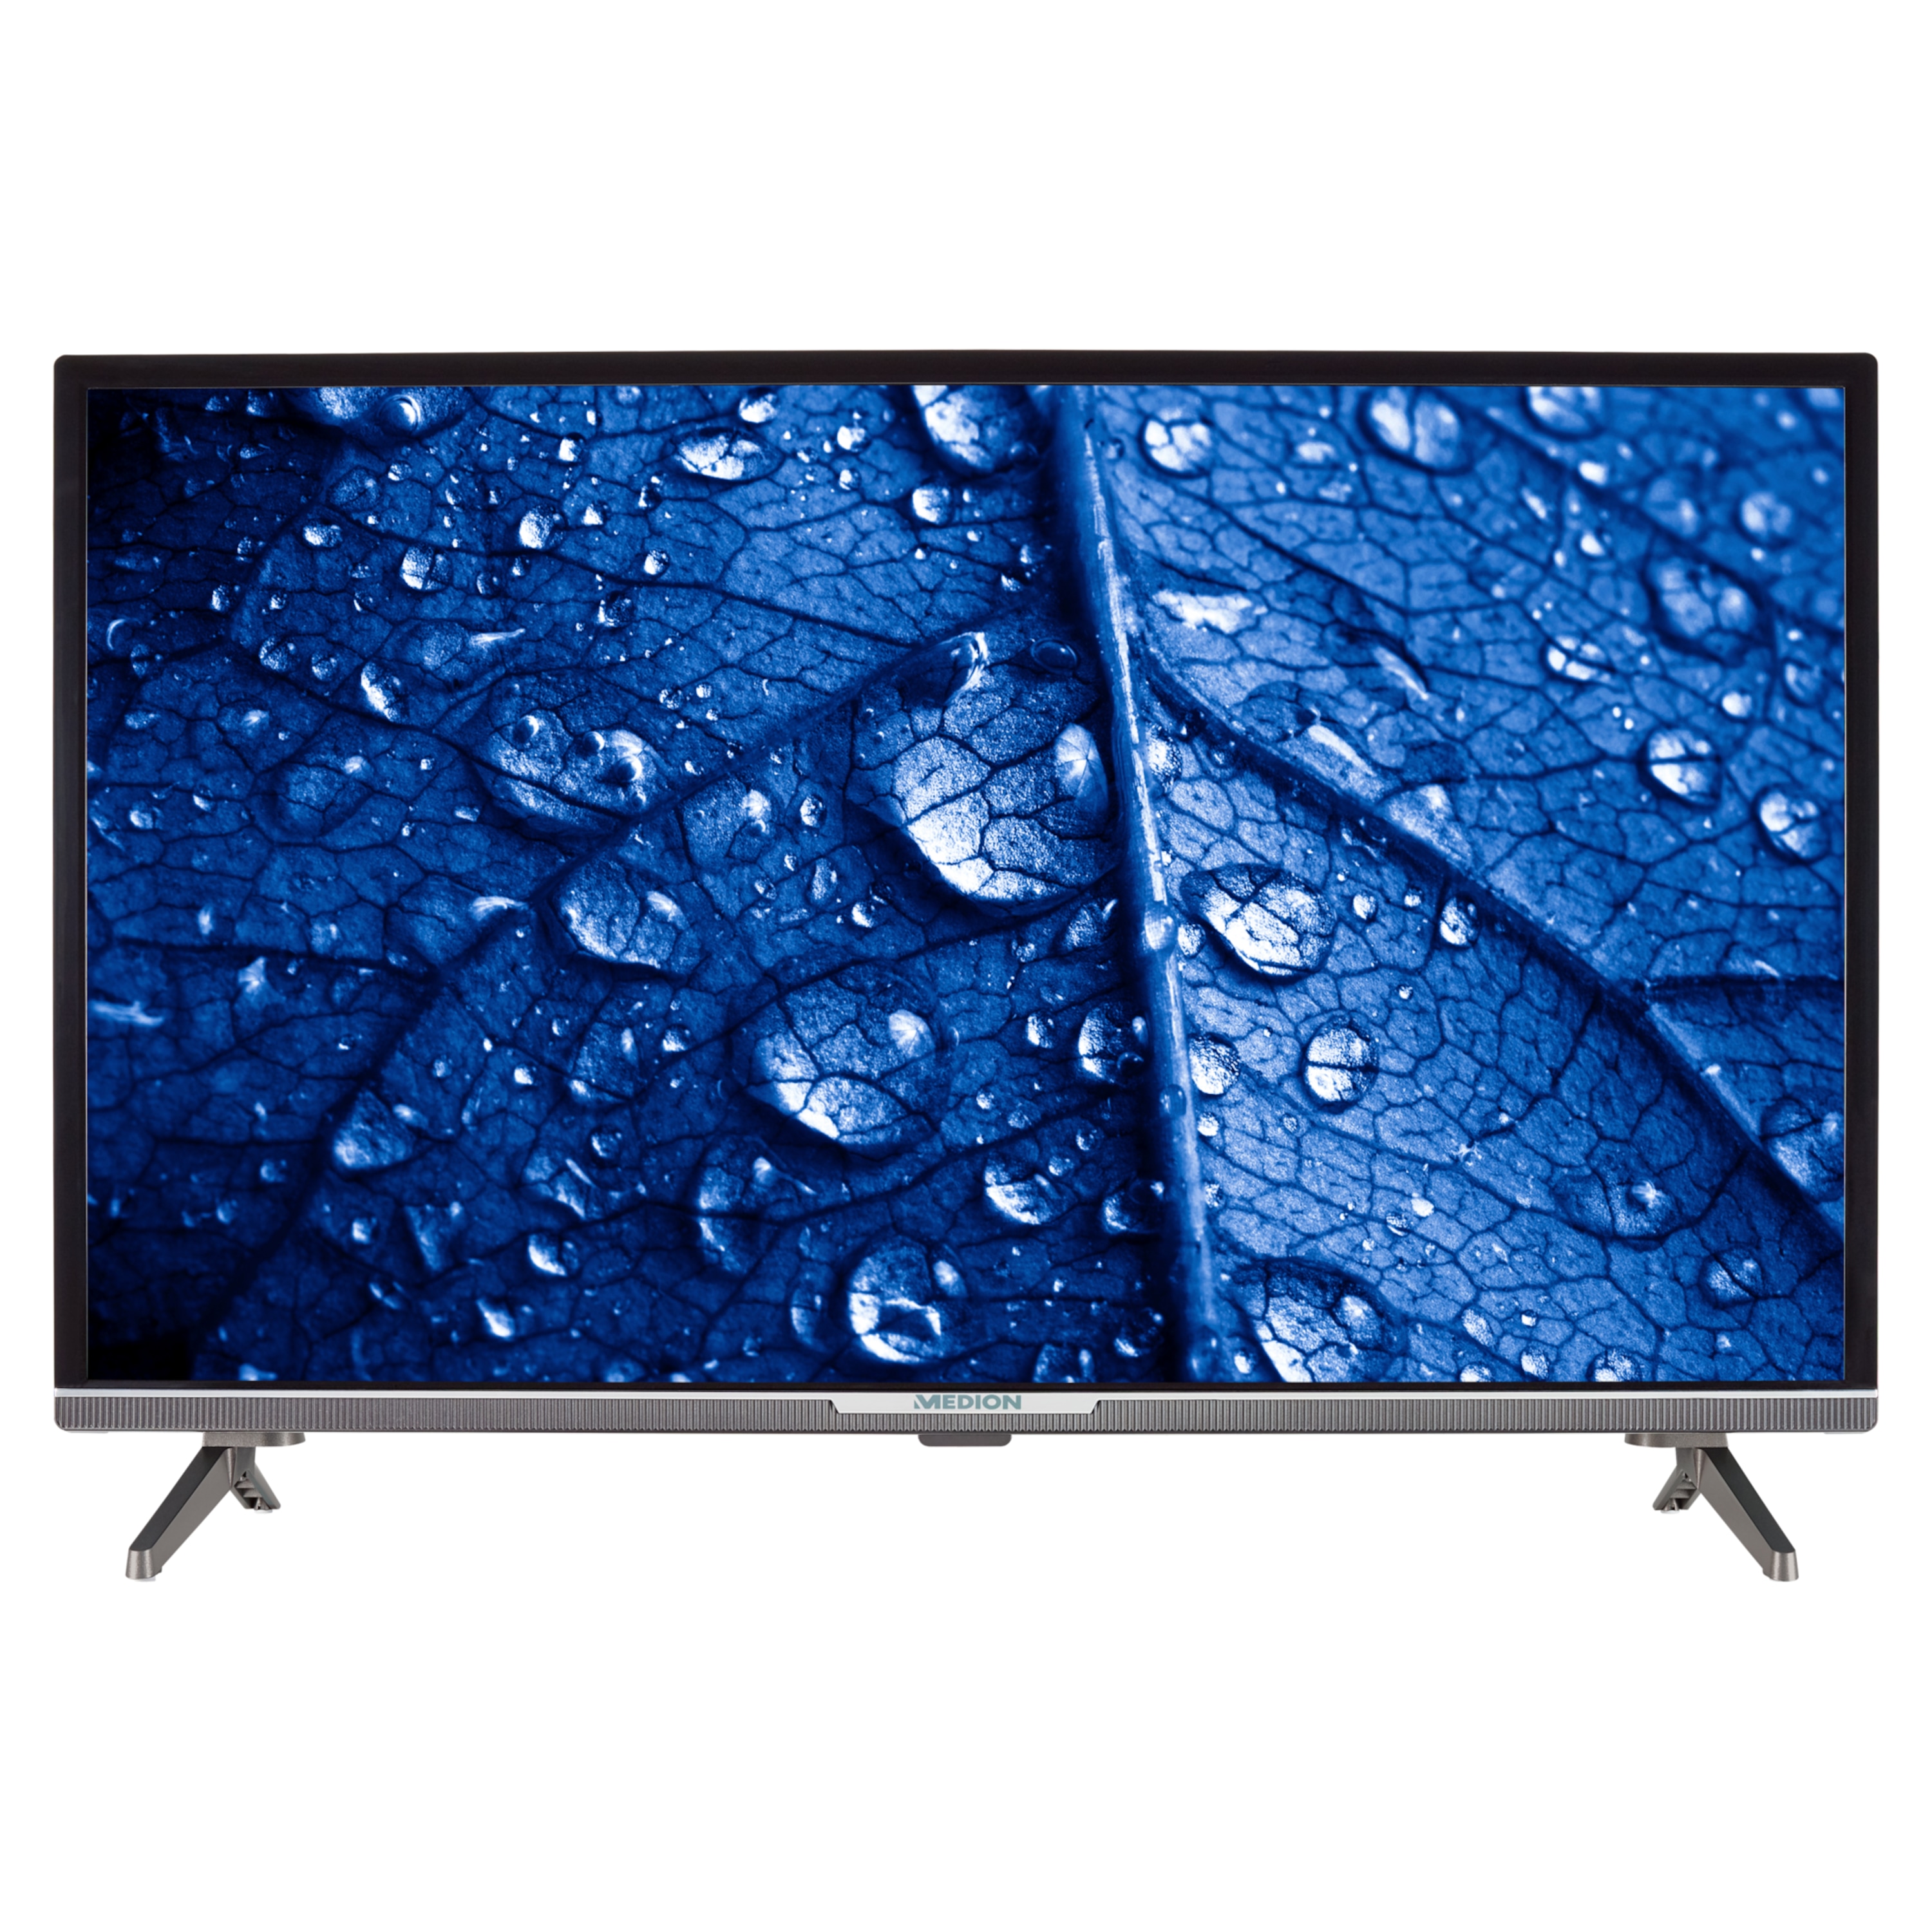 MEDION LIFE® P13290 Smart TV | 80 cm(32 inch)Full HD Display | PVR ready | Bluetooth | Netflix | Amazon Prime Video online kopen